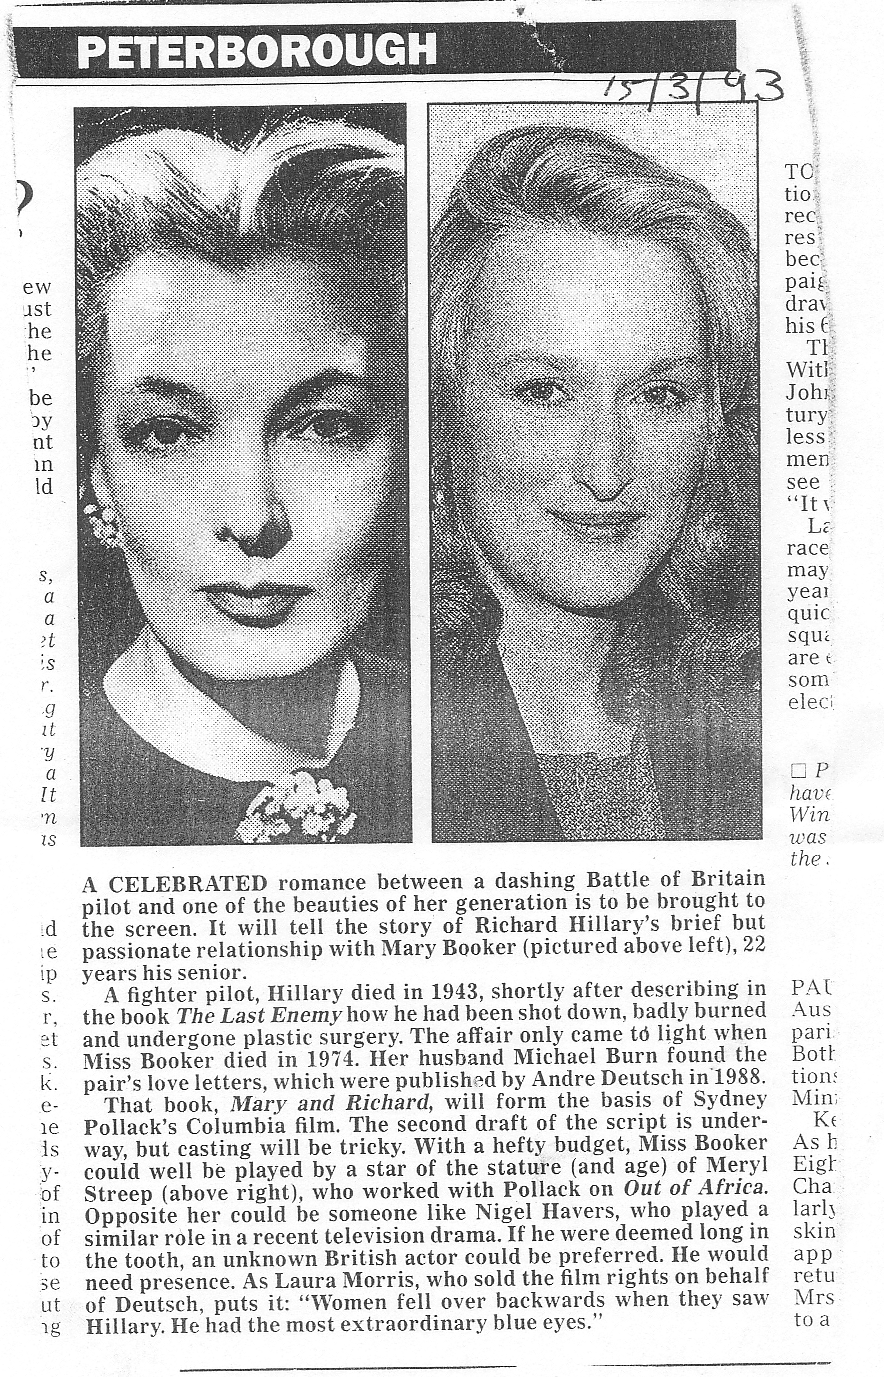 Newspaper cutting showin Mary Booker and Meryl Streep